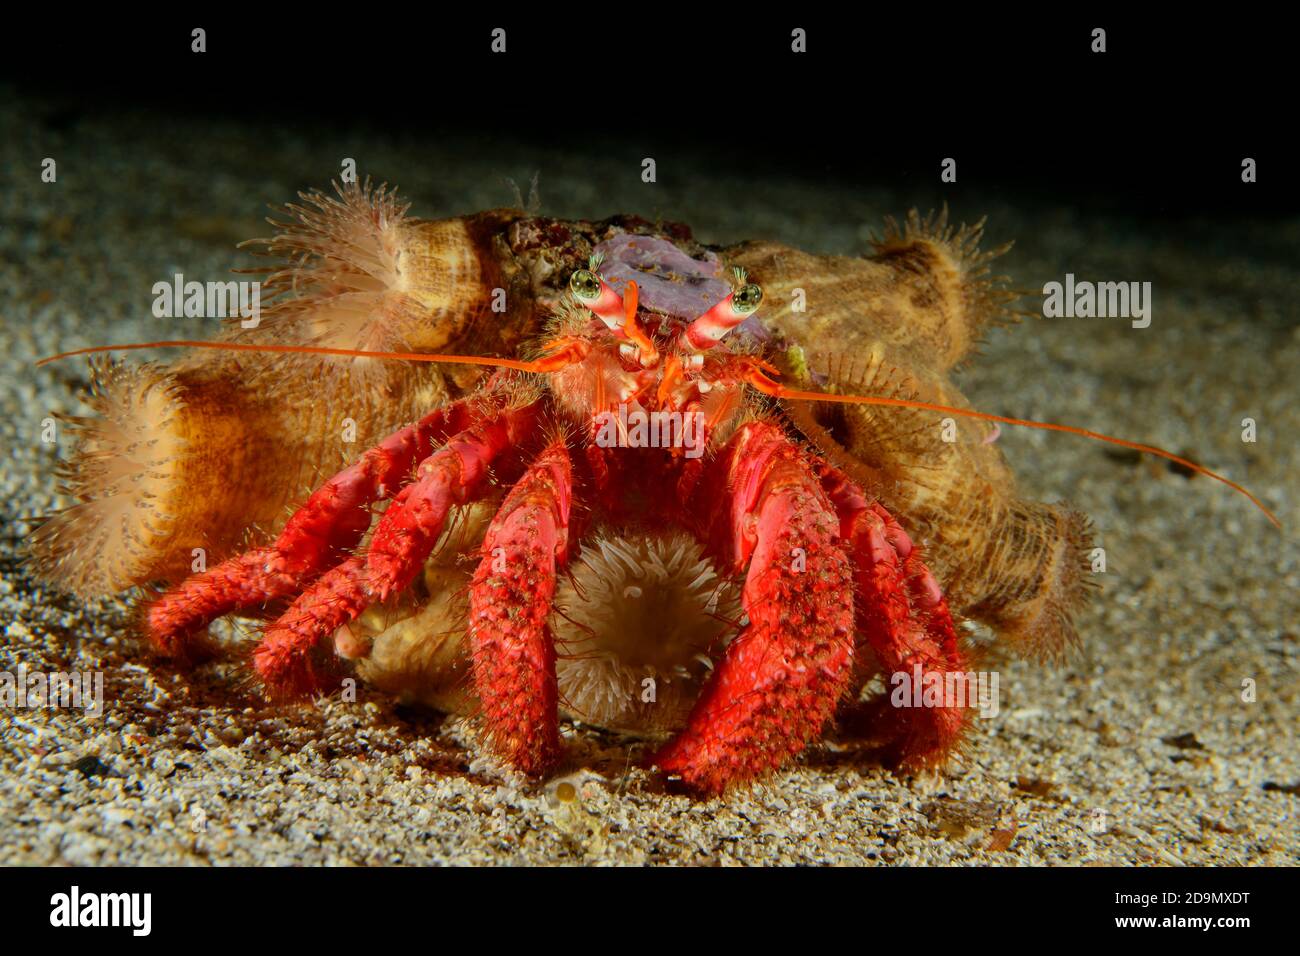 Large red hermit crab with hermit water lily, Dardanus calidus with Calliactis parasitica, Tamariu, Costa Brava, Spain, Mediterranean Stock Photo